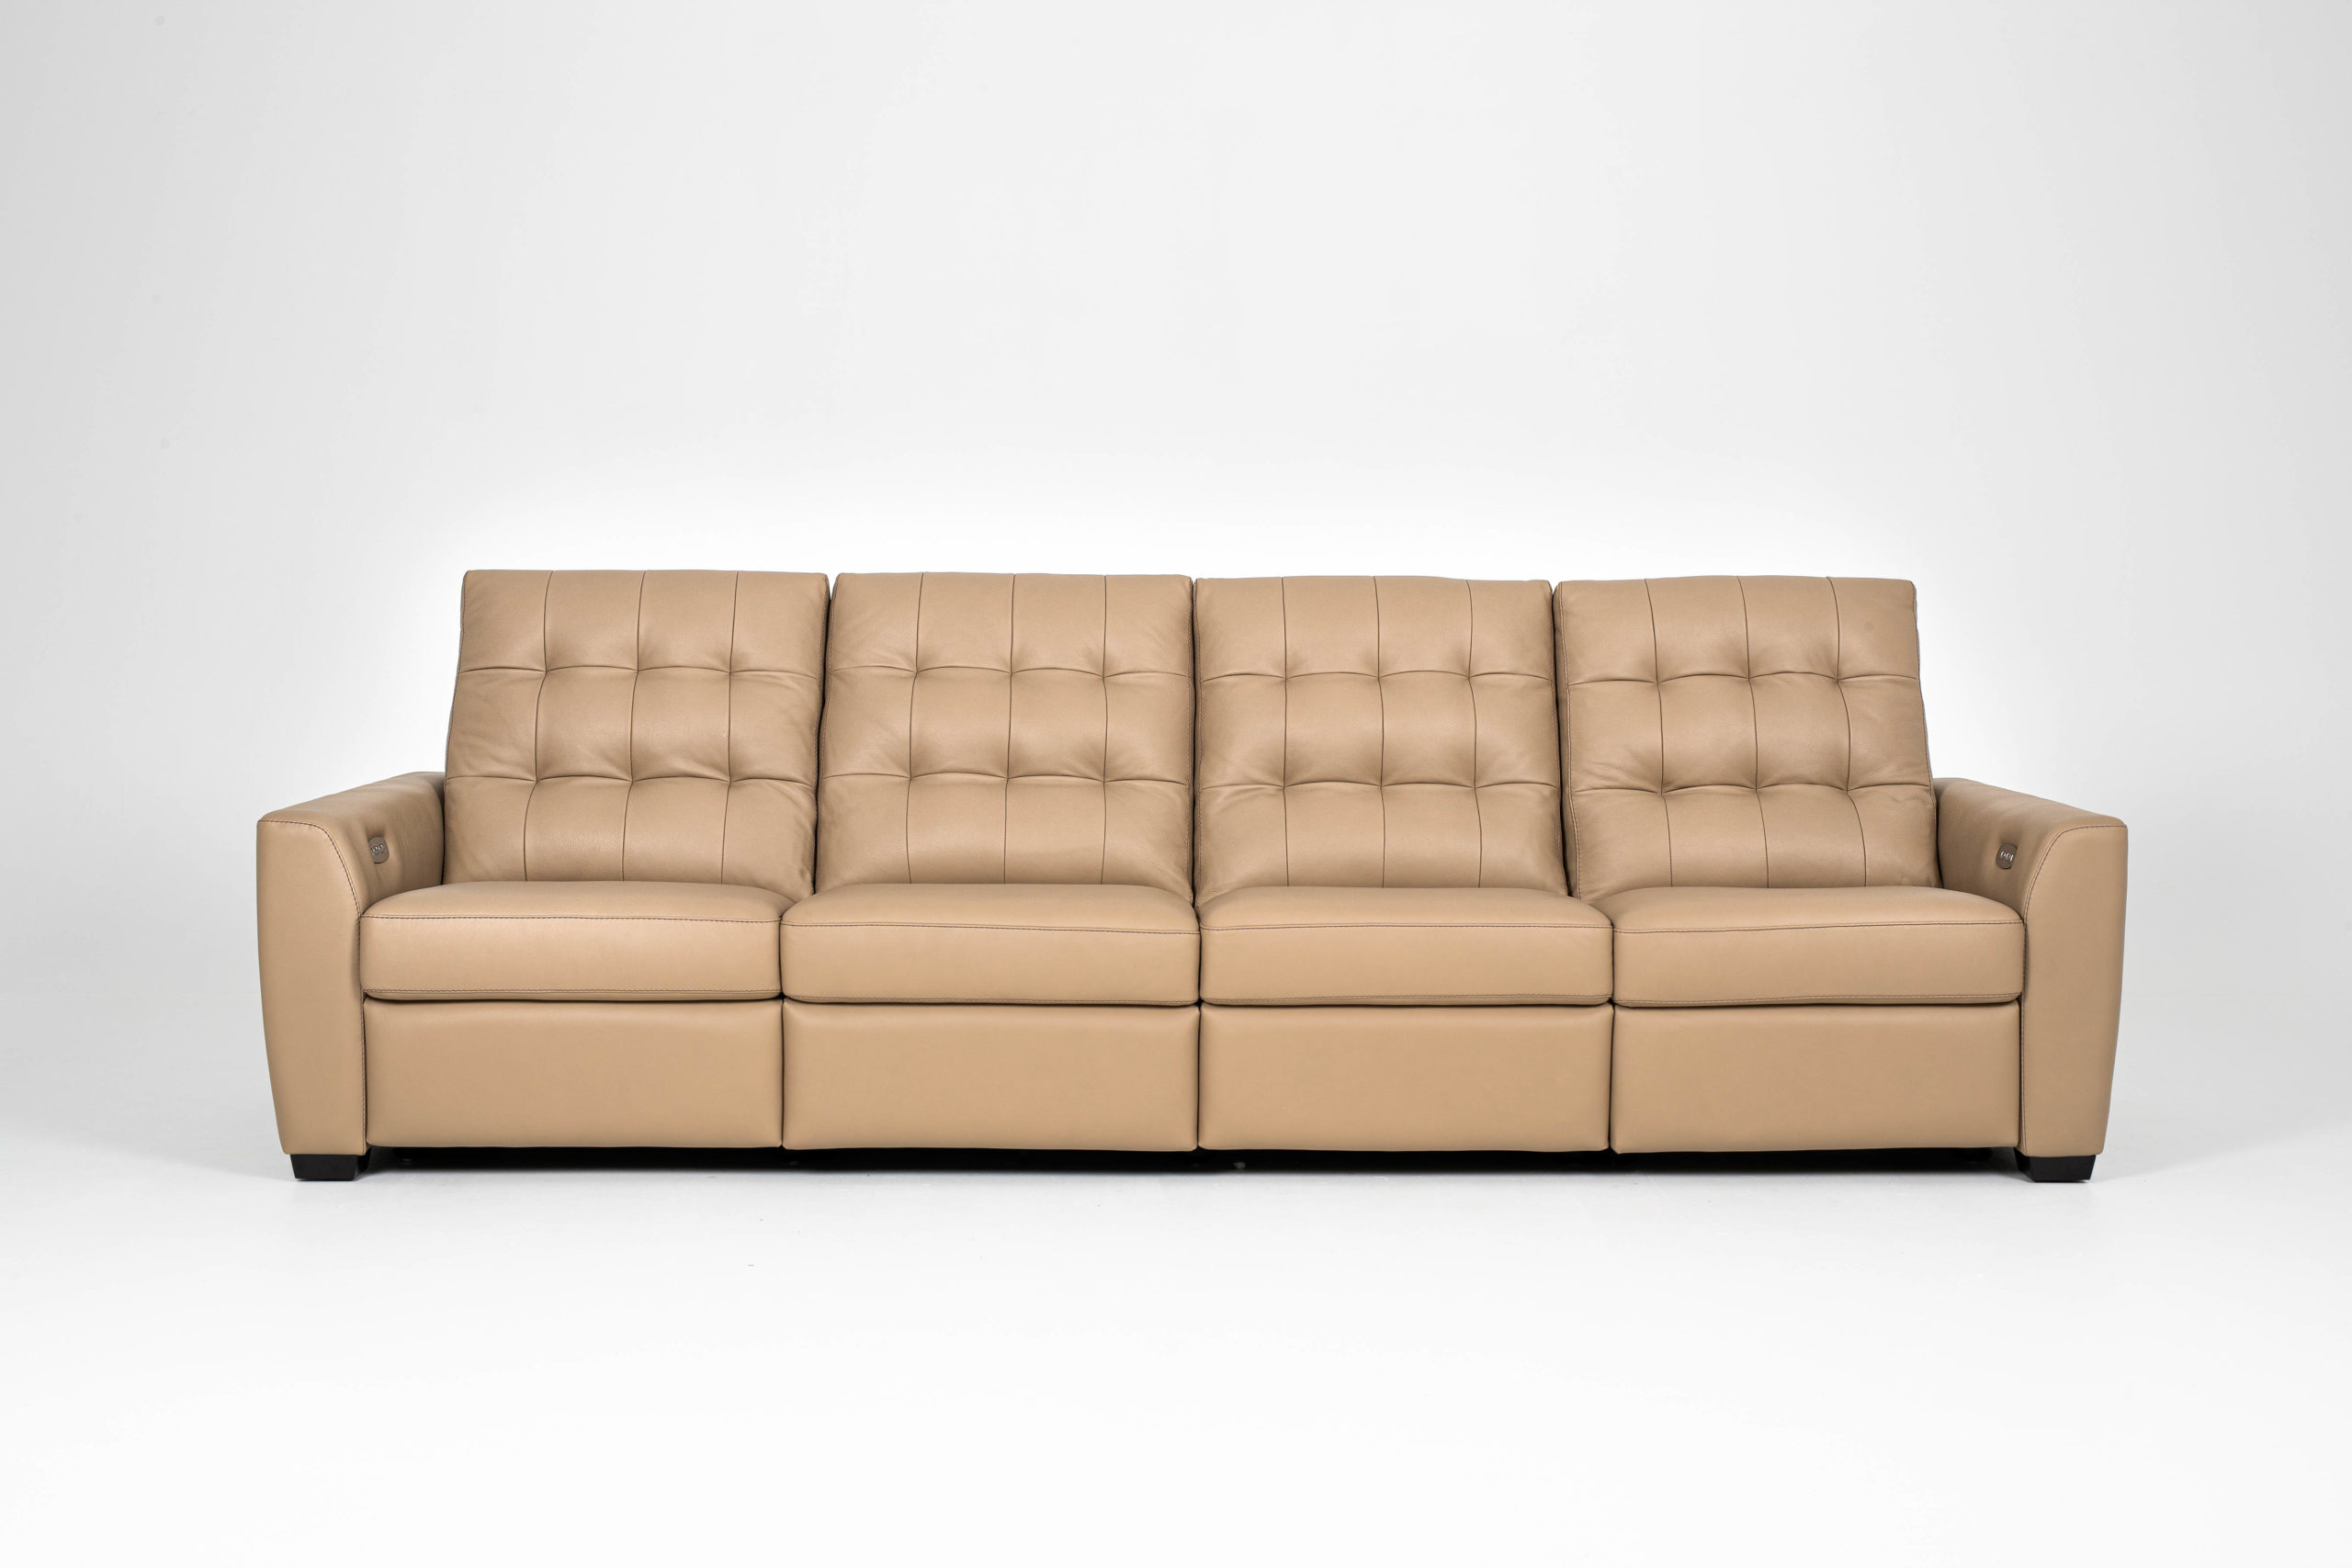 robinson 4 seat leather sofa with ottoman